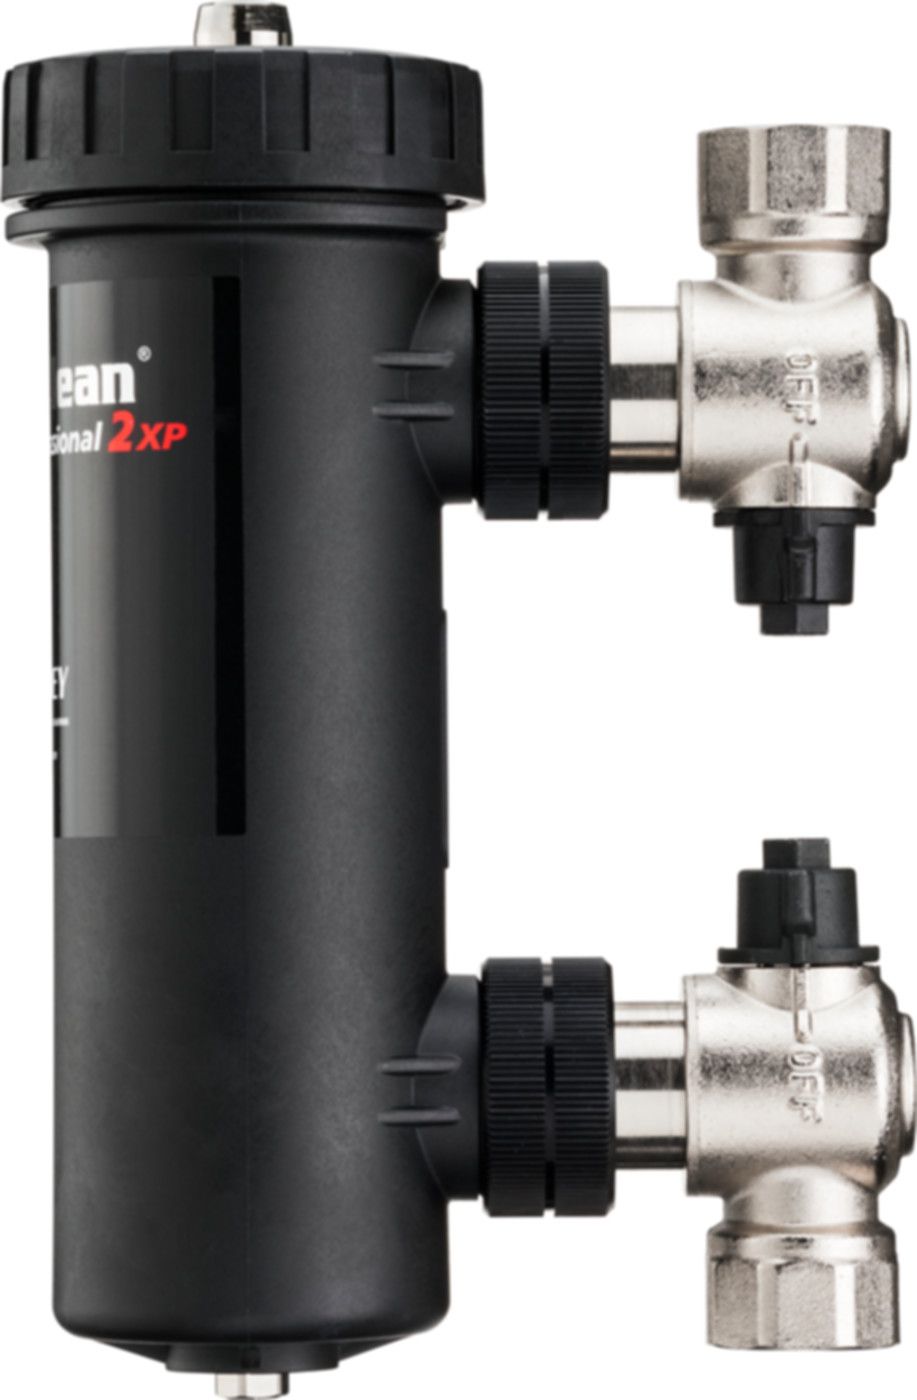 Magnetflussfilter ADEY Magna Clean Pro2 XP 28 mm - Heizungswasseraufbereitung